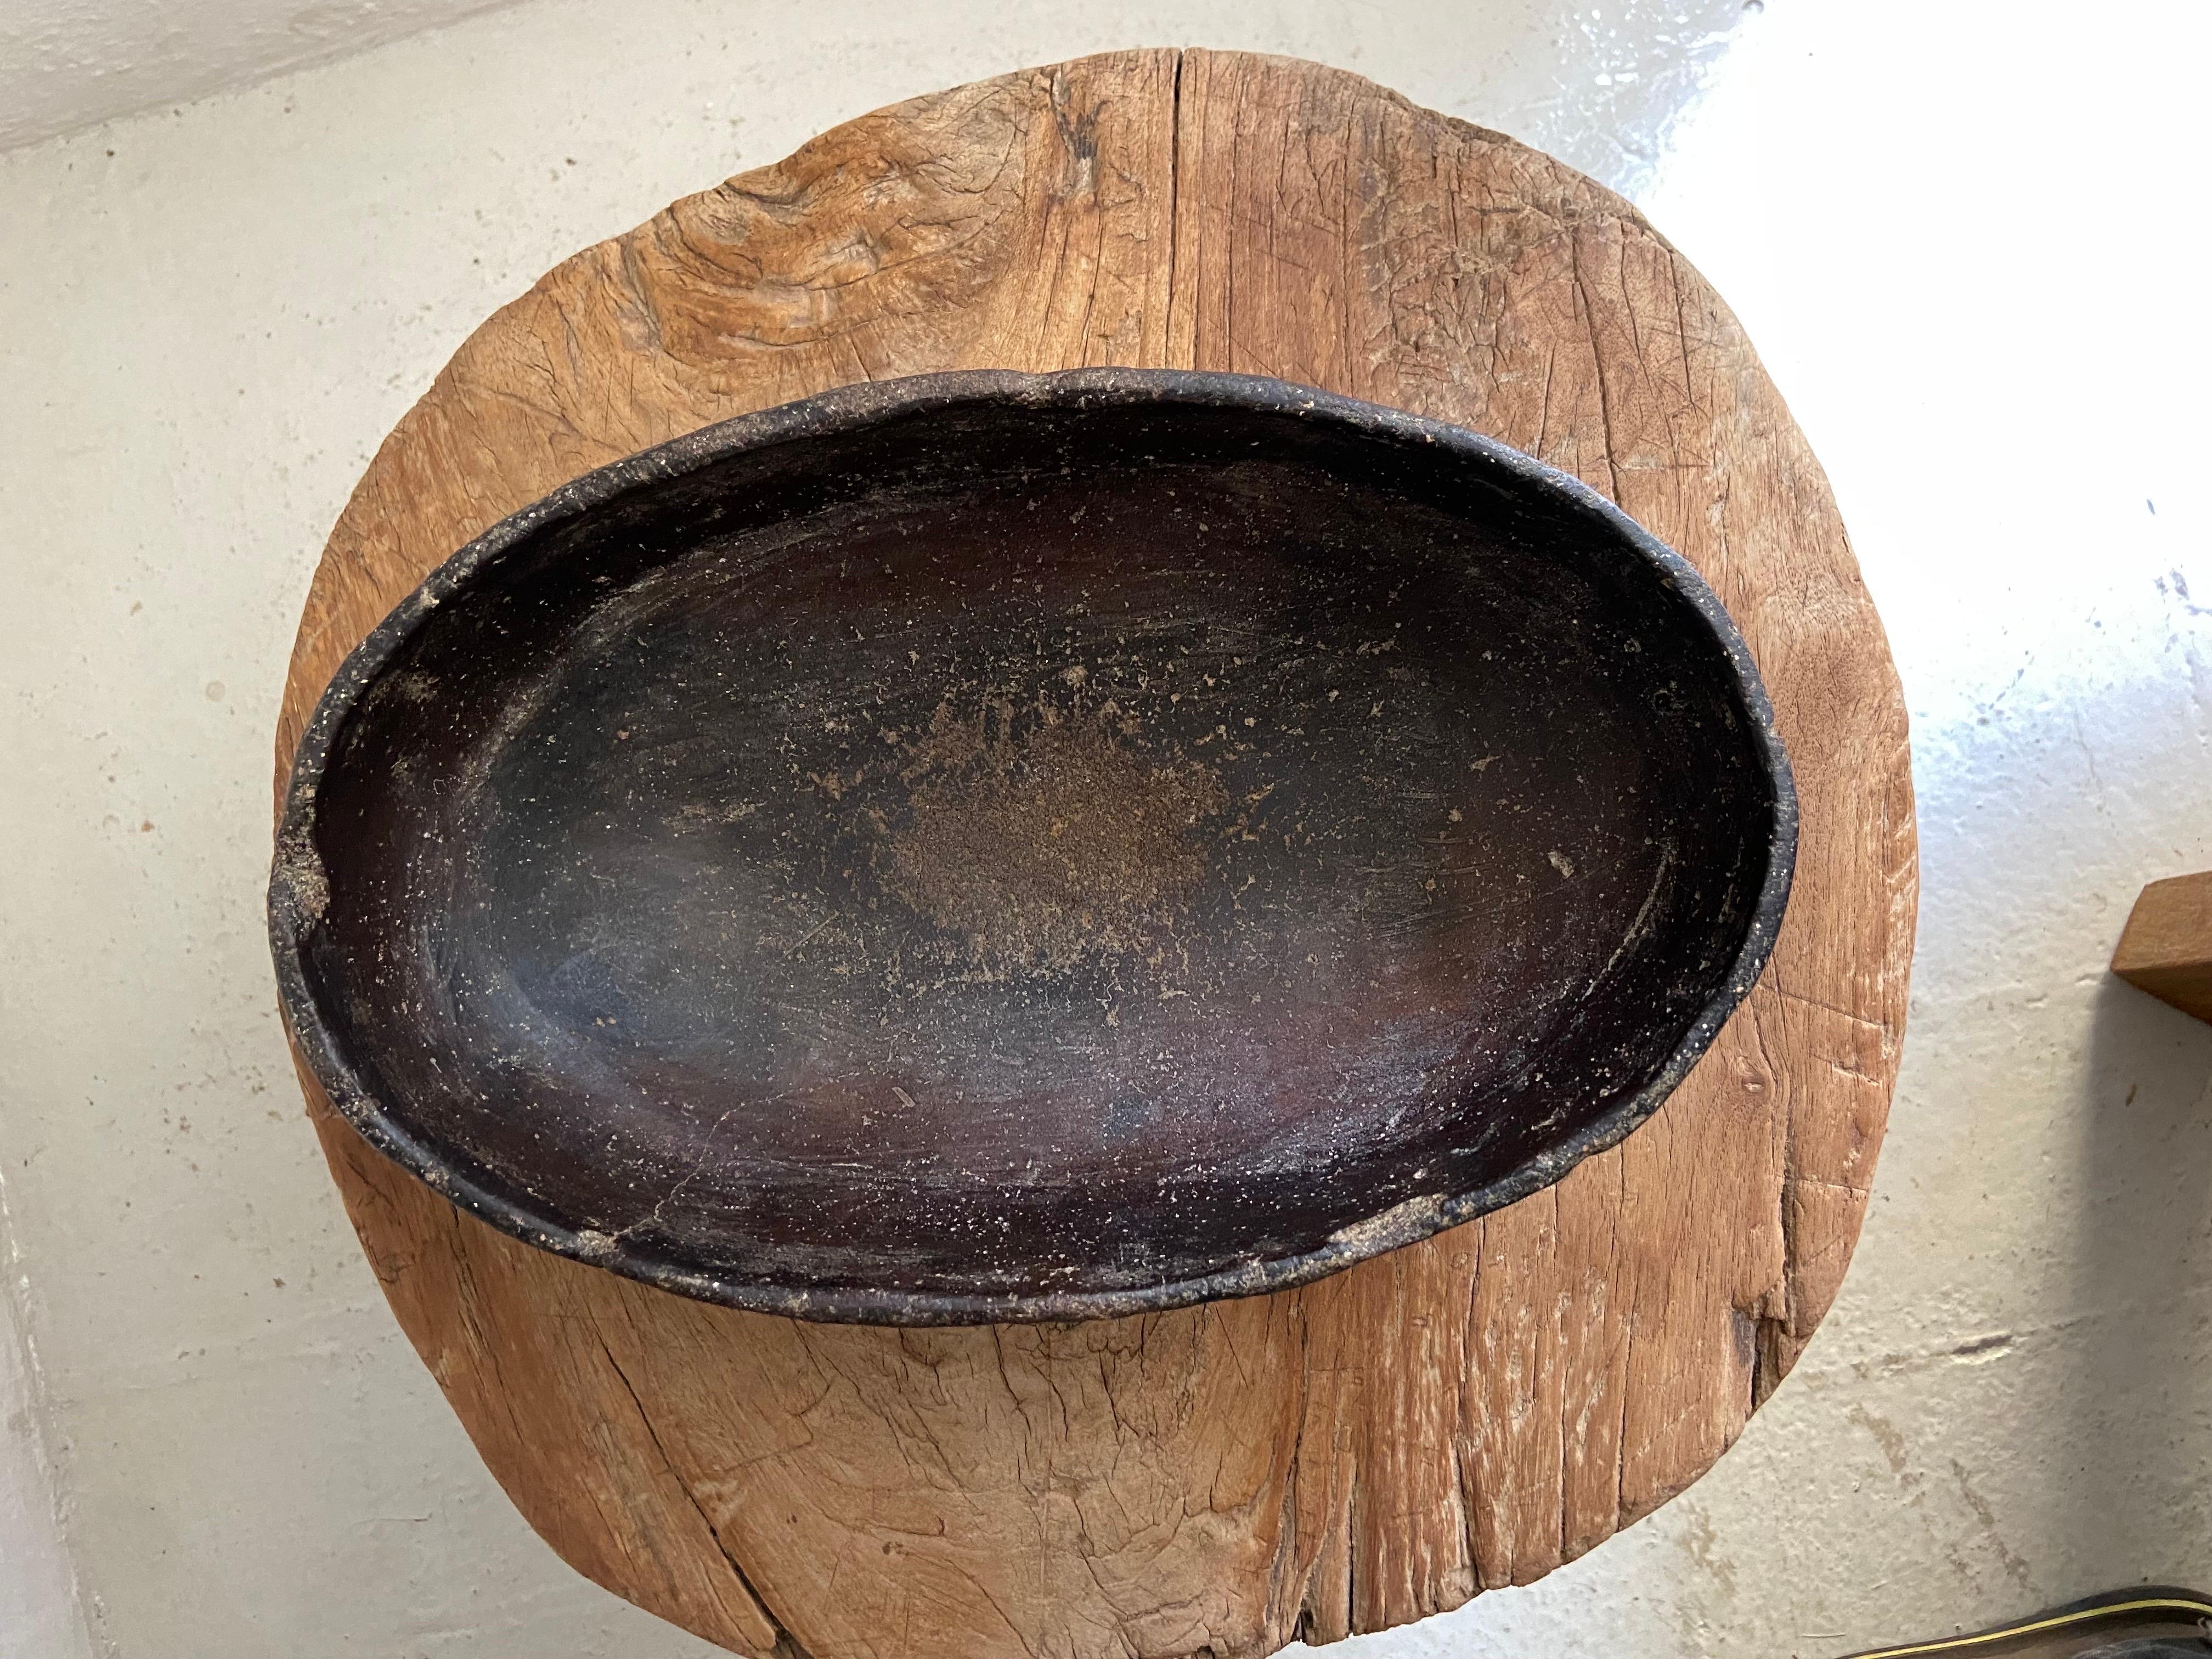 Primitive Styled Ceramic Bowl From The Mixteca Region of Oaxaca, Mexico 4